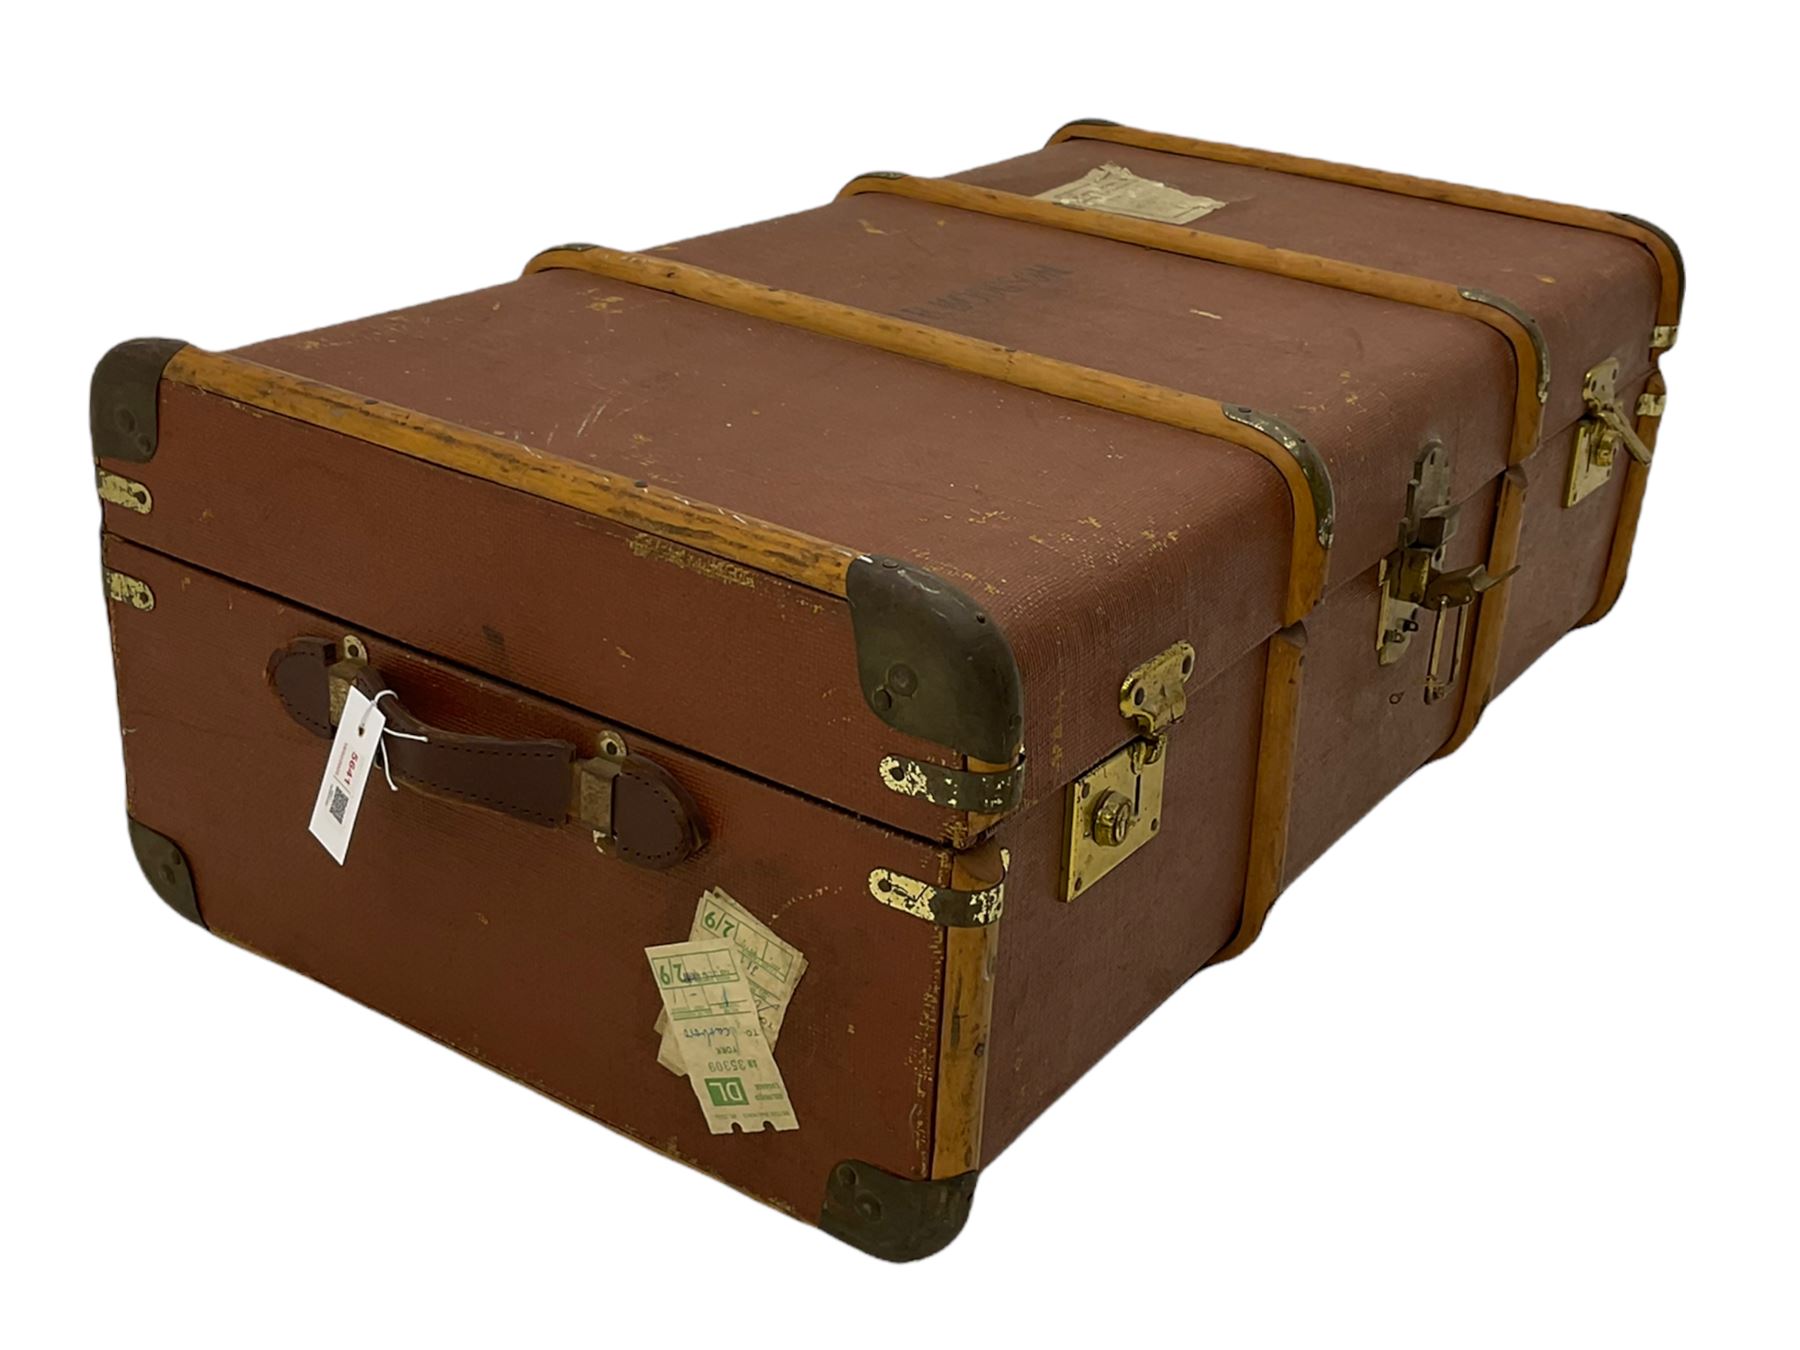 Vintage wooden bound trunk - Image 2 of 5